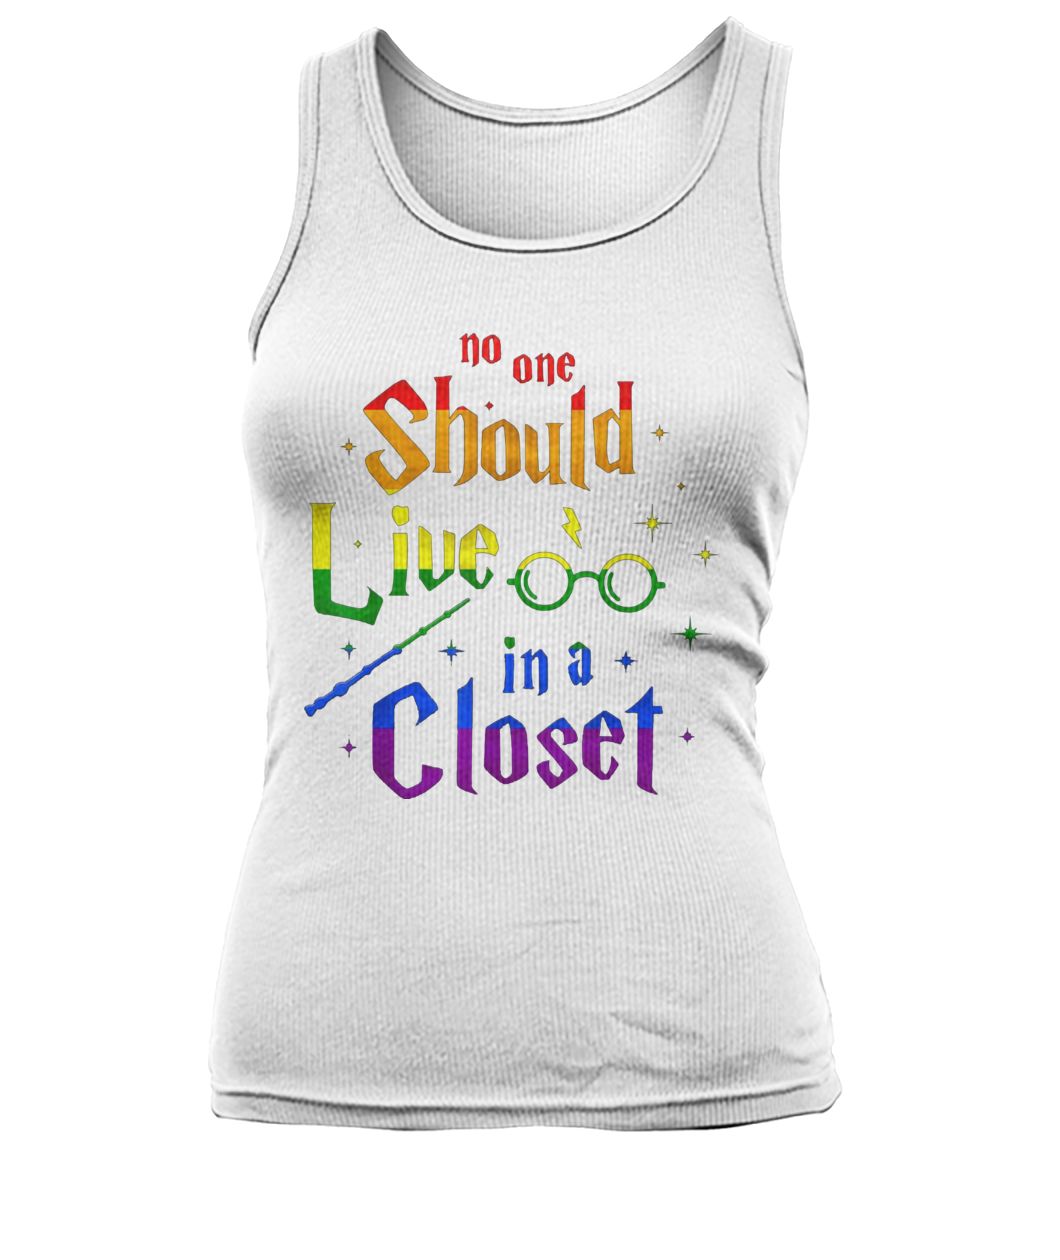 No one should live in a closet LGBT gay pride women's tank top